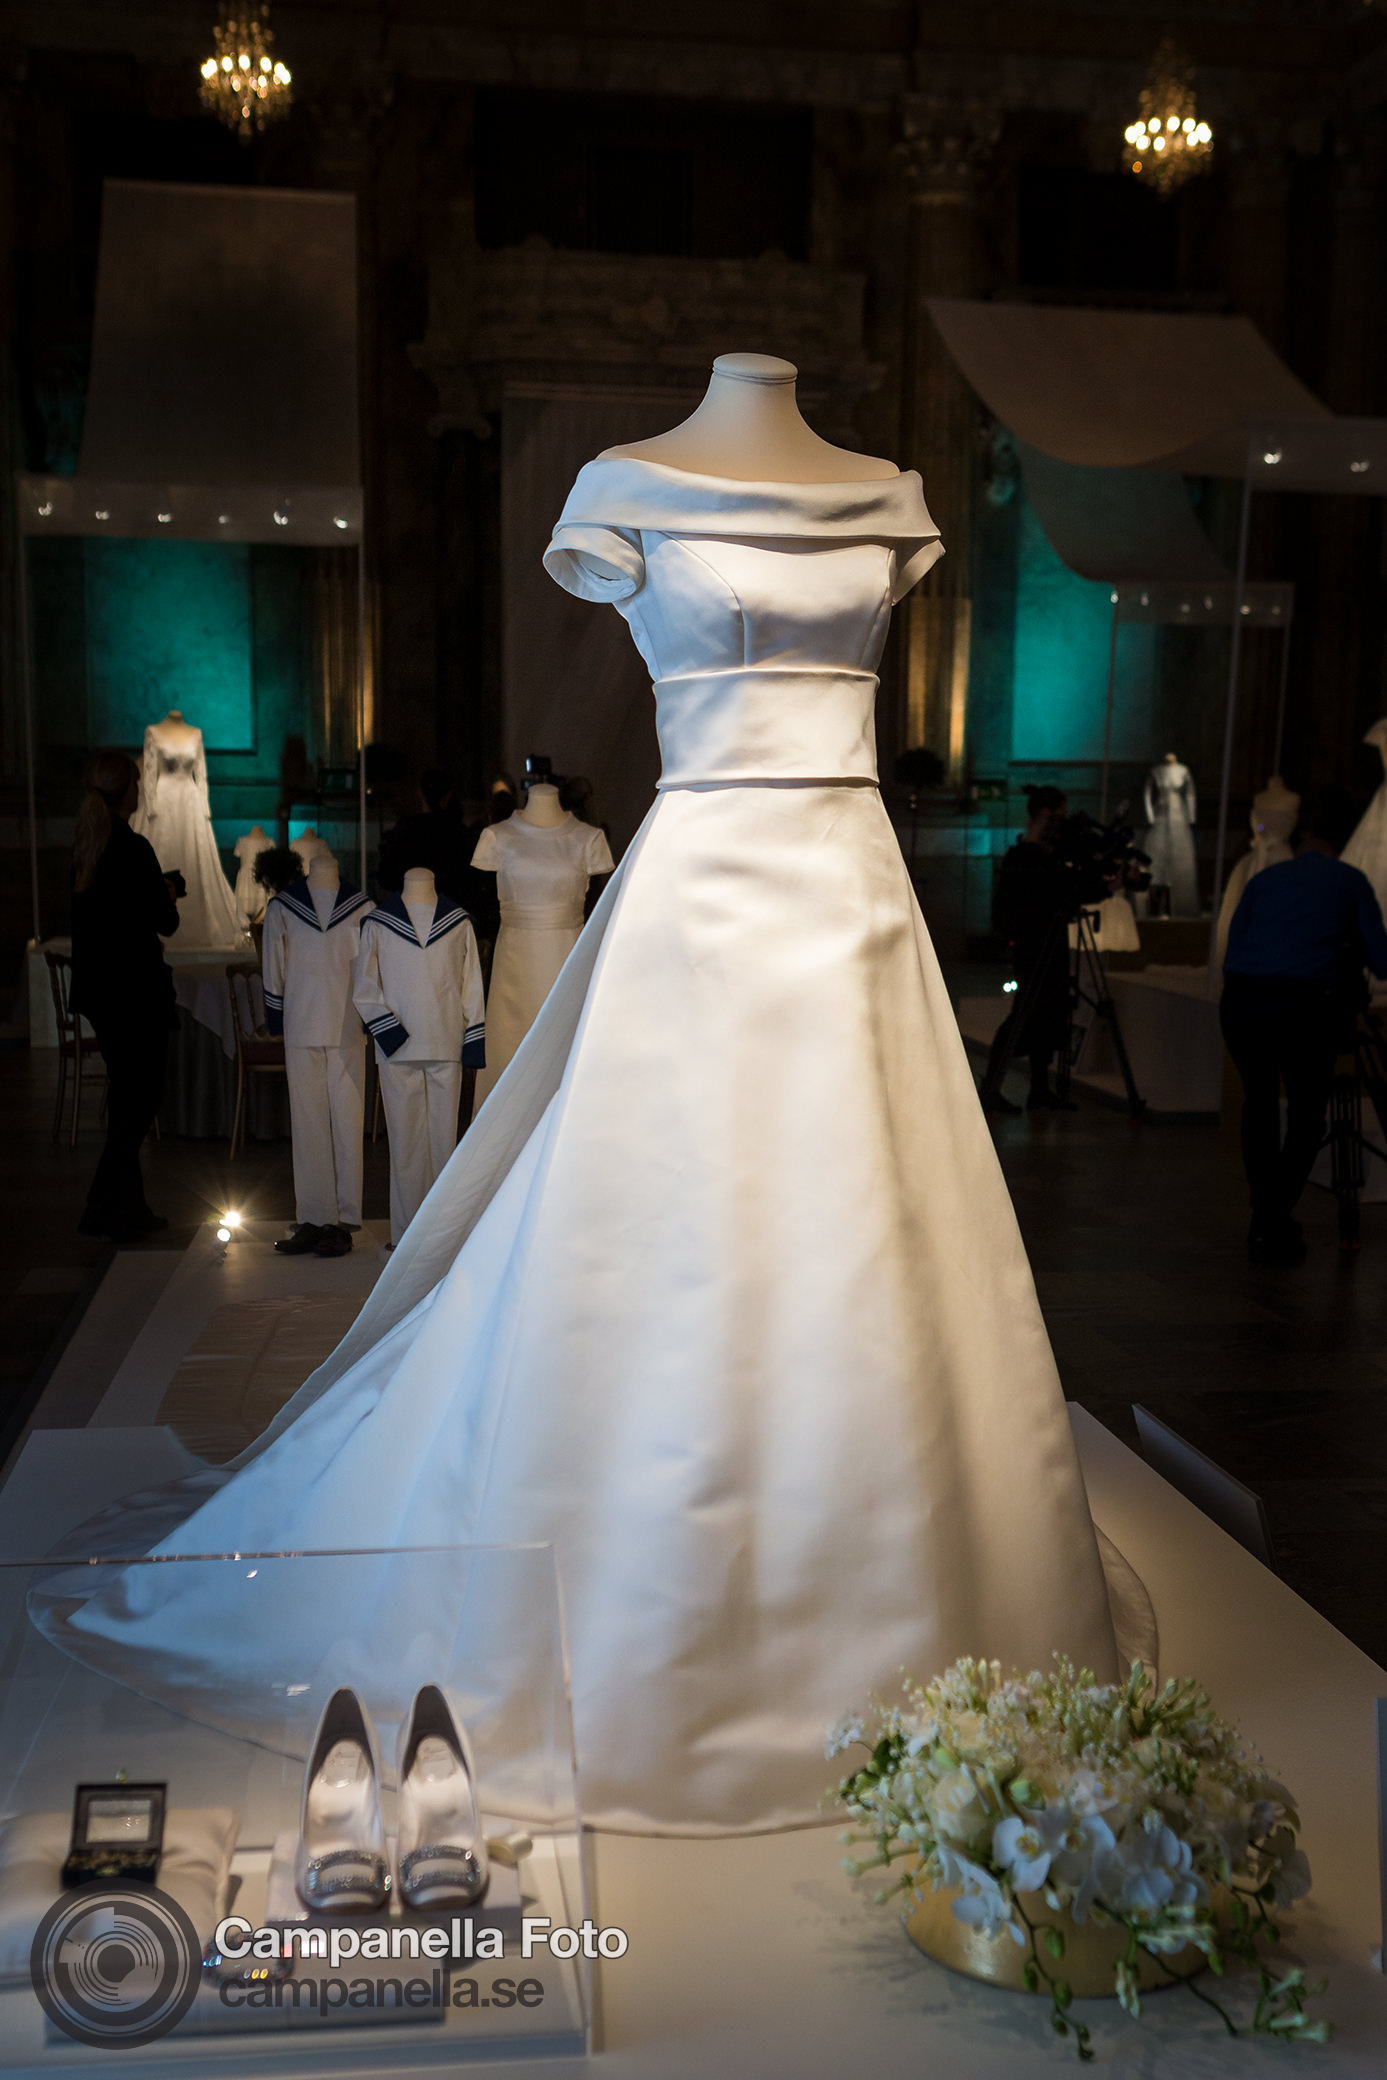 Royal wedding dresses exhibition - Michael Campanella Photography